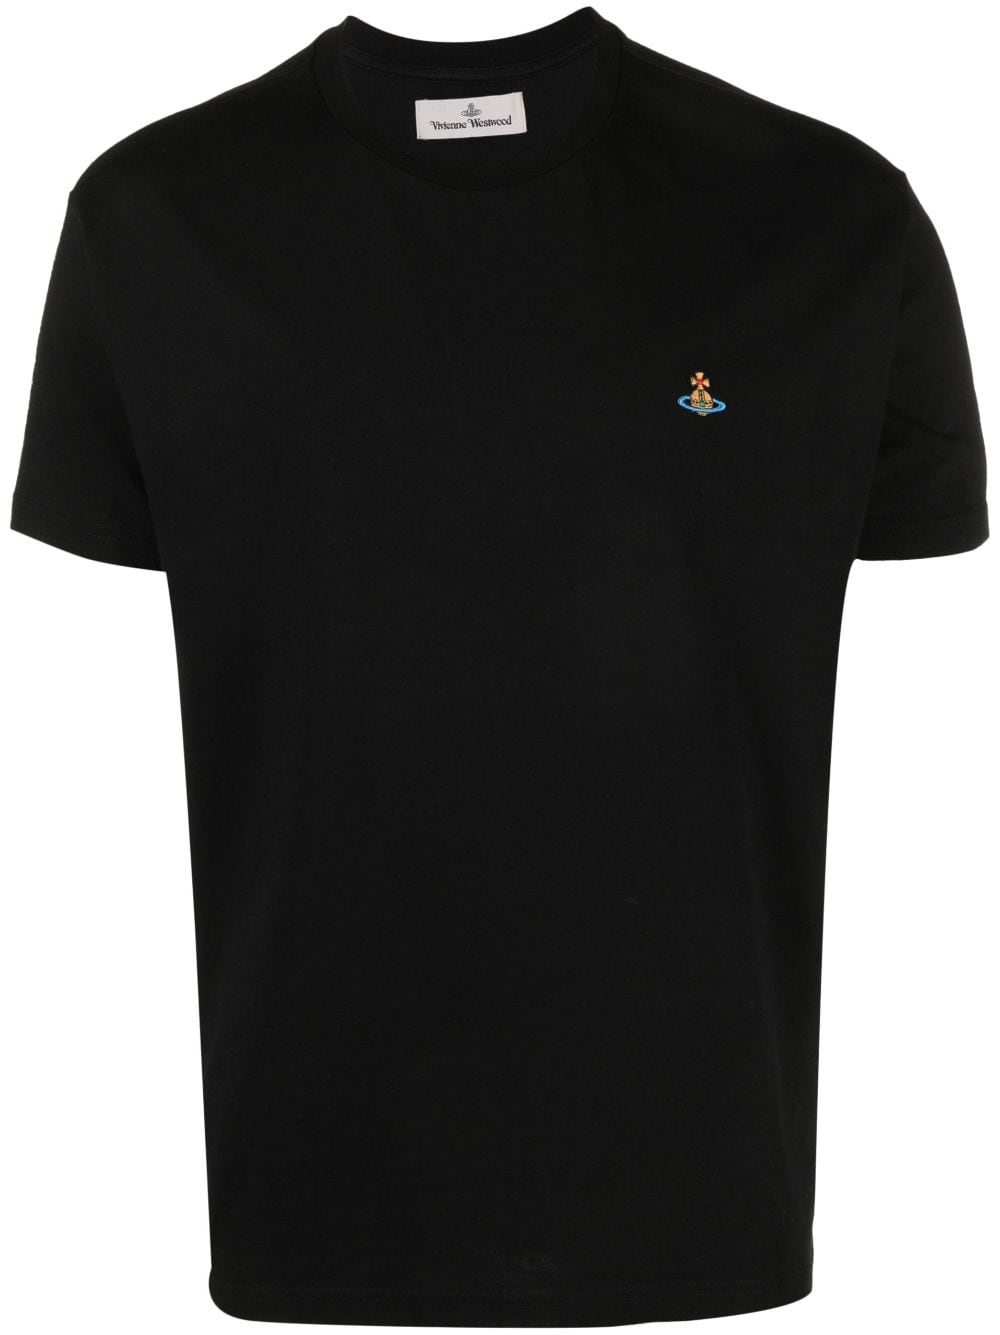 black t-shirt with logo